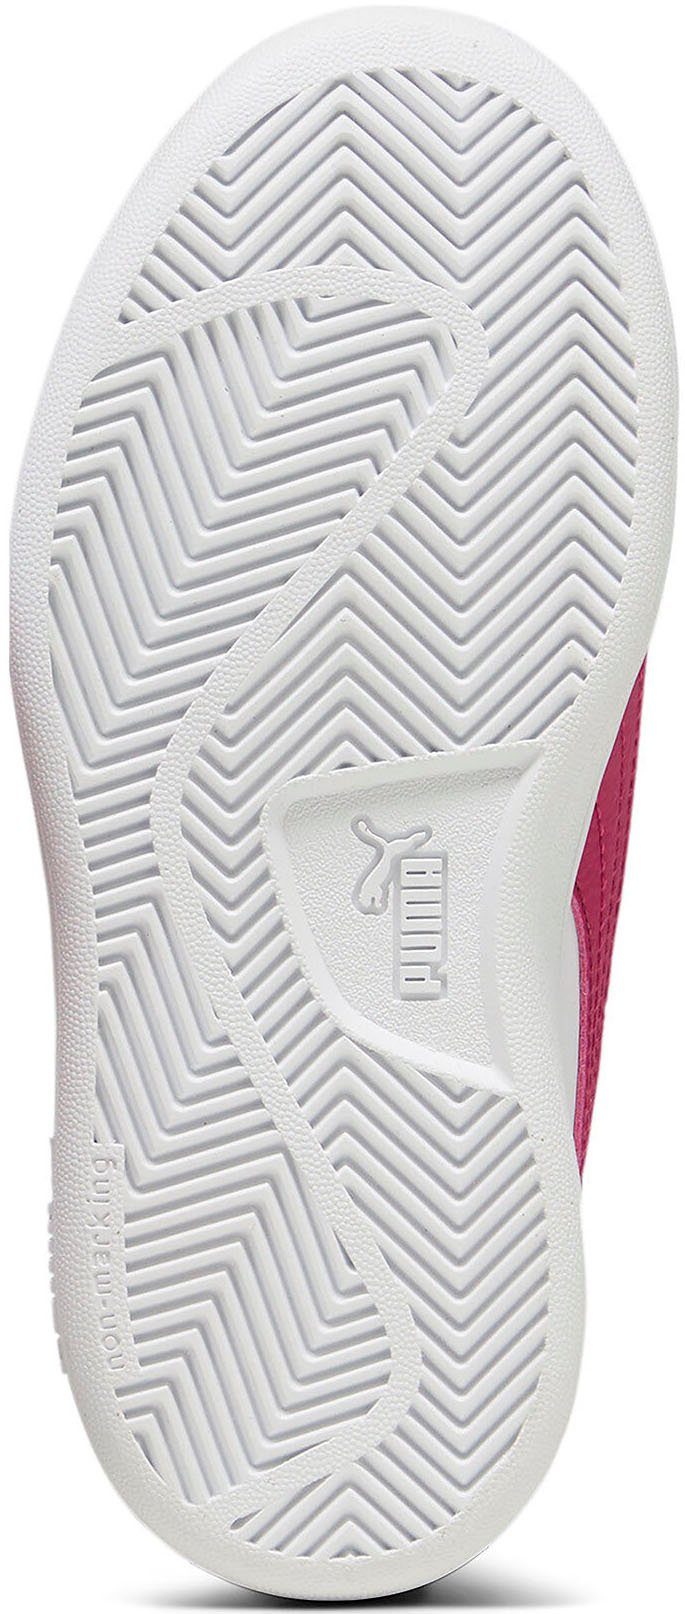 PUMA SMASH 3.0 Sneaker White-Pinktastic PUMA L PS Klettverschluss V mit